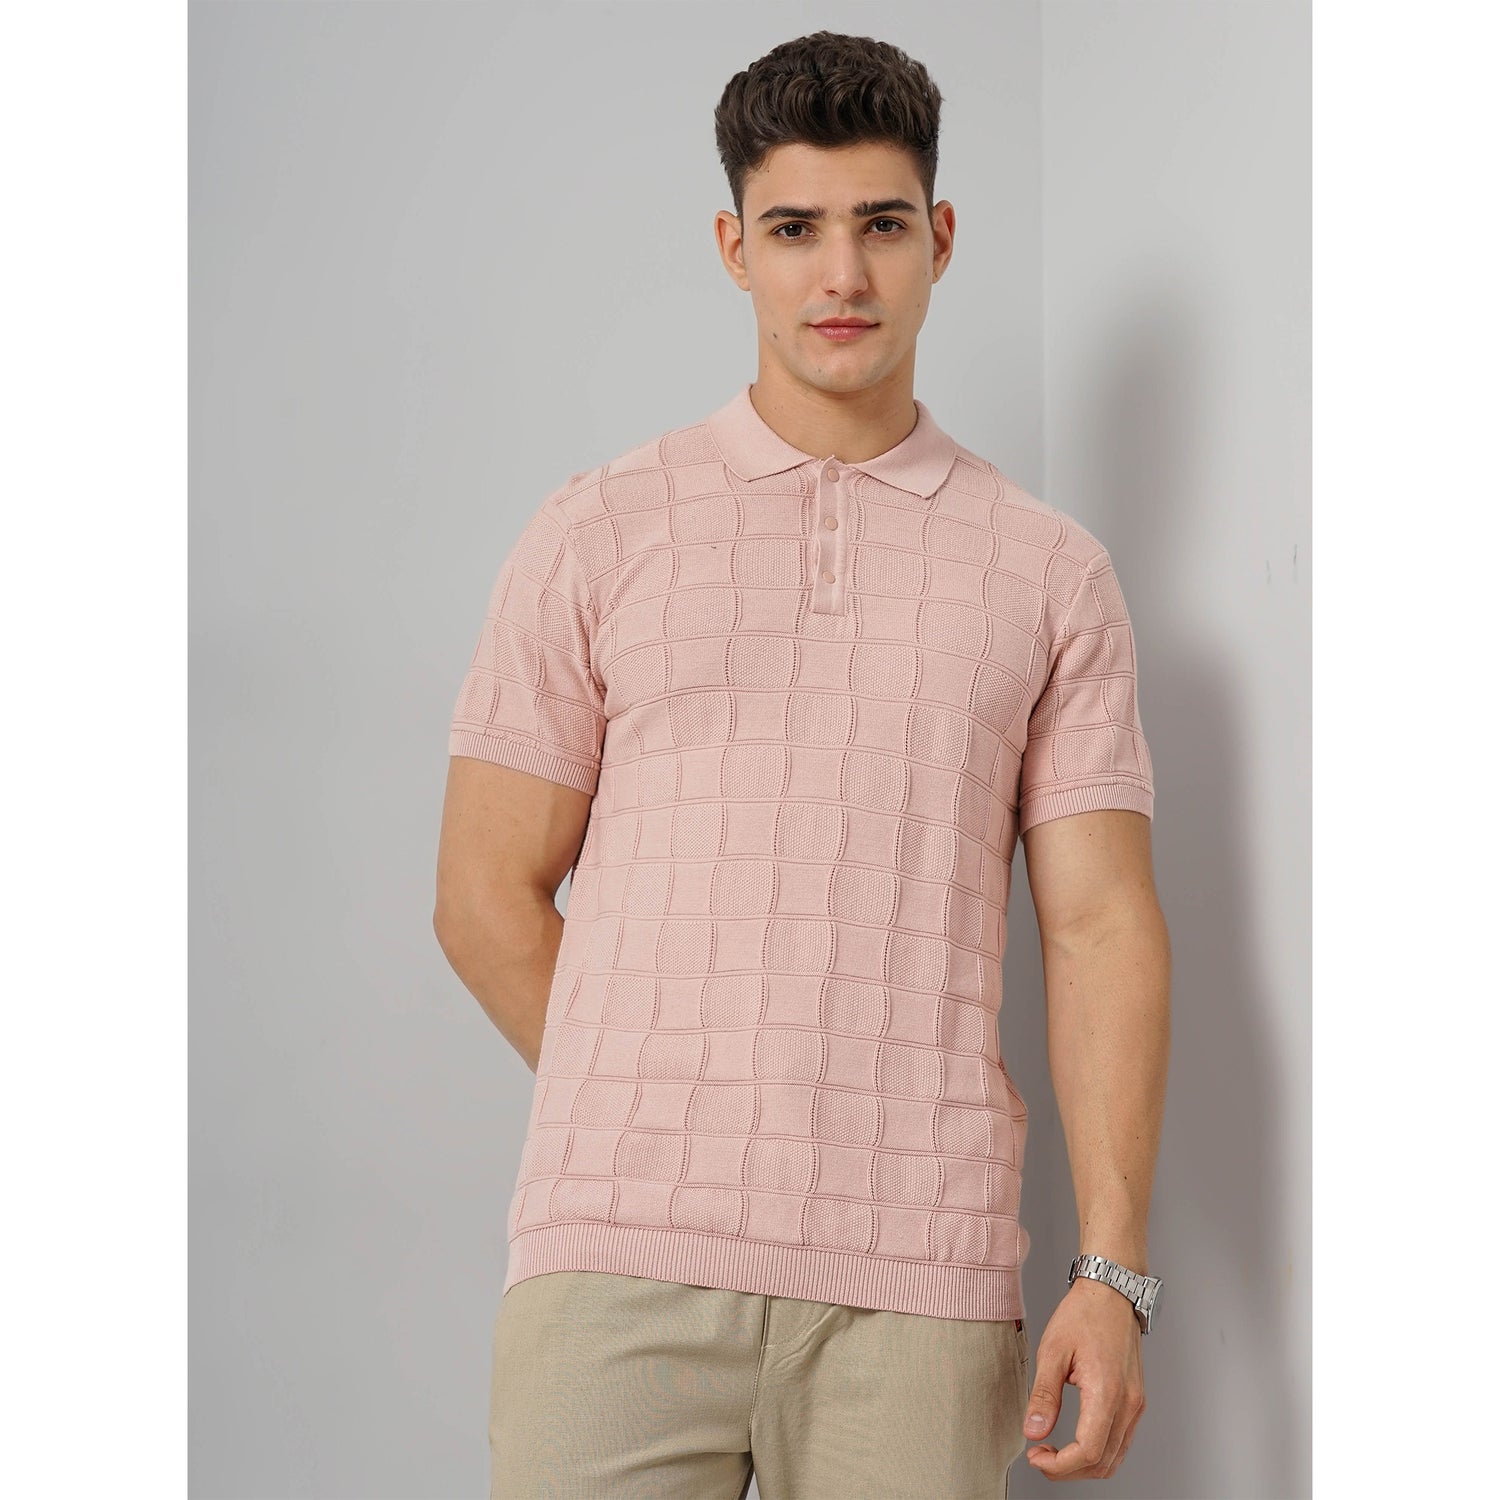 Textured Pink Cotton T-Shirt (FESQUARE)